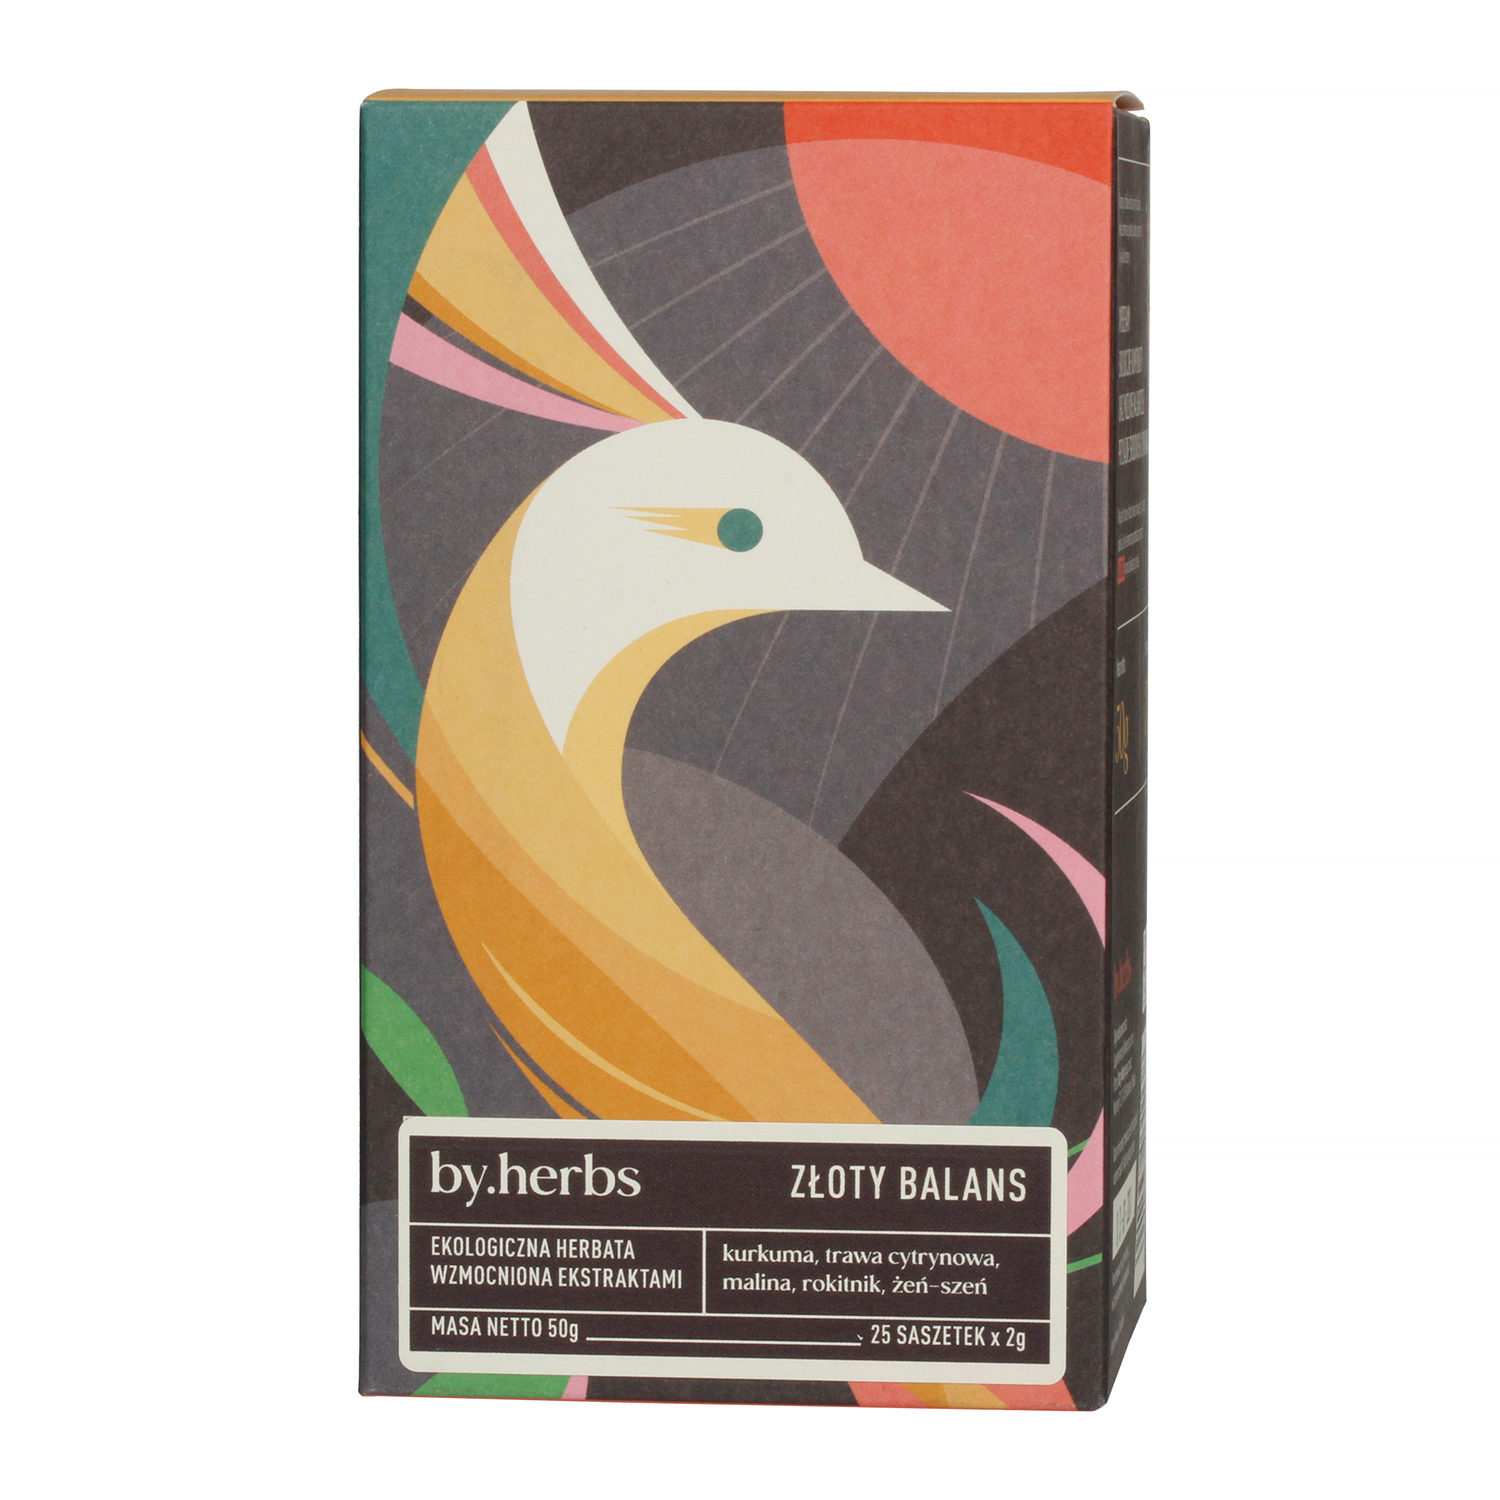 By.herbs - Złoty Balans - Herbata ziołowa z ekstraktami - 25 torebek